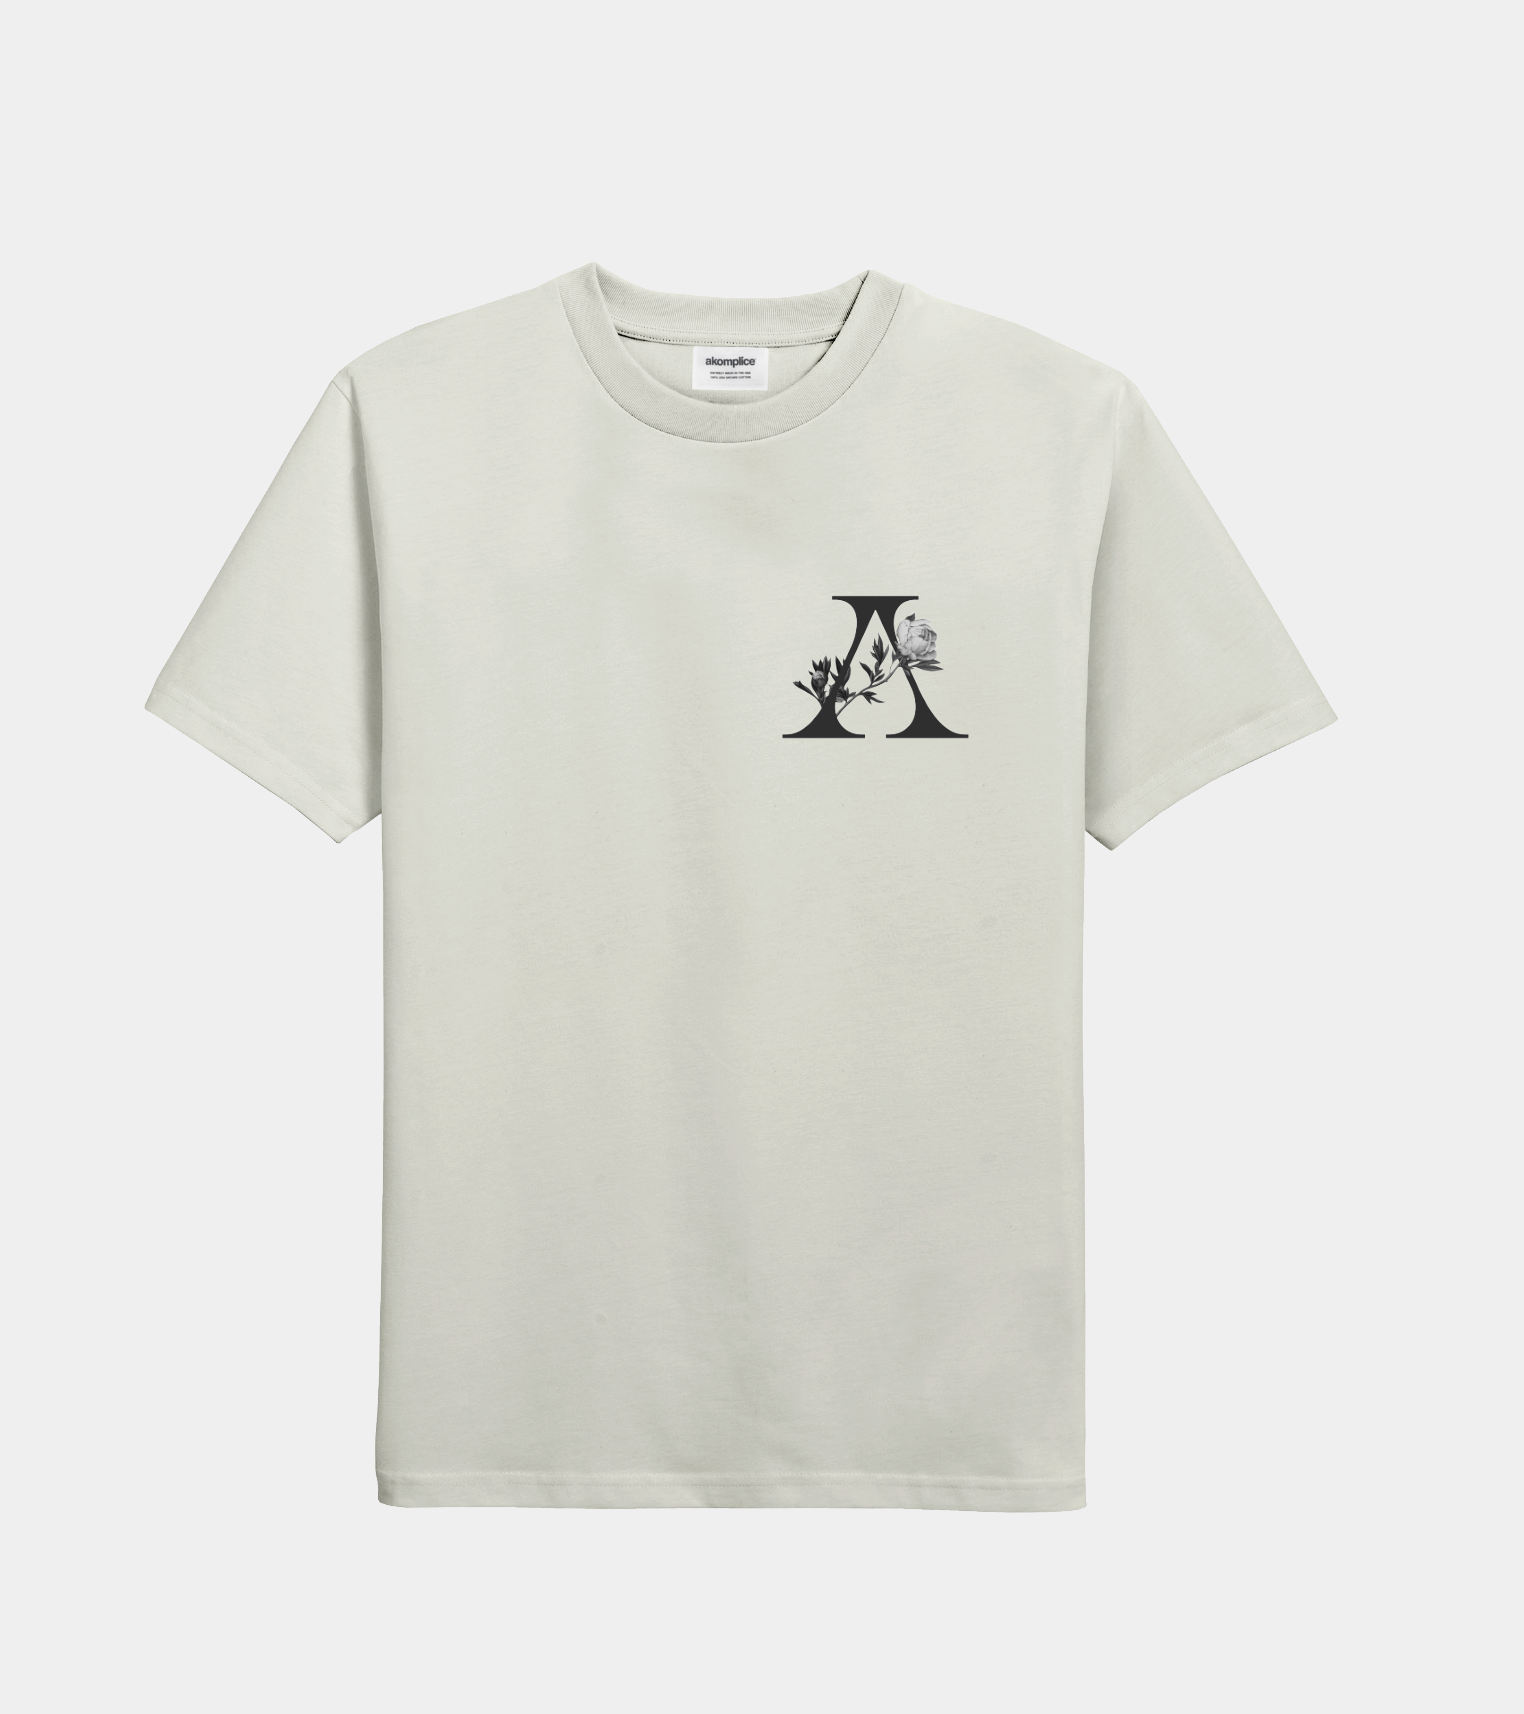 Louis Vuitton 2021 Printed T-Shirt - Grey Tops, Clothing